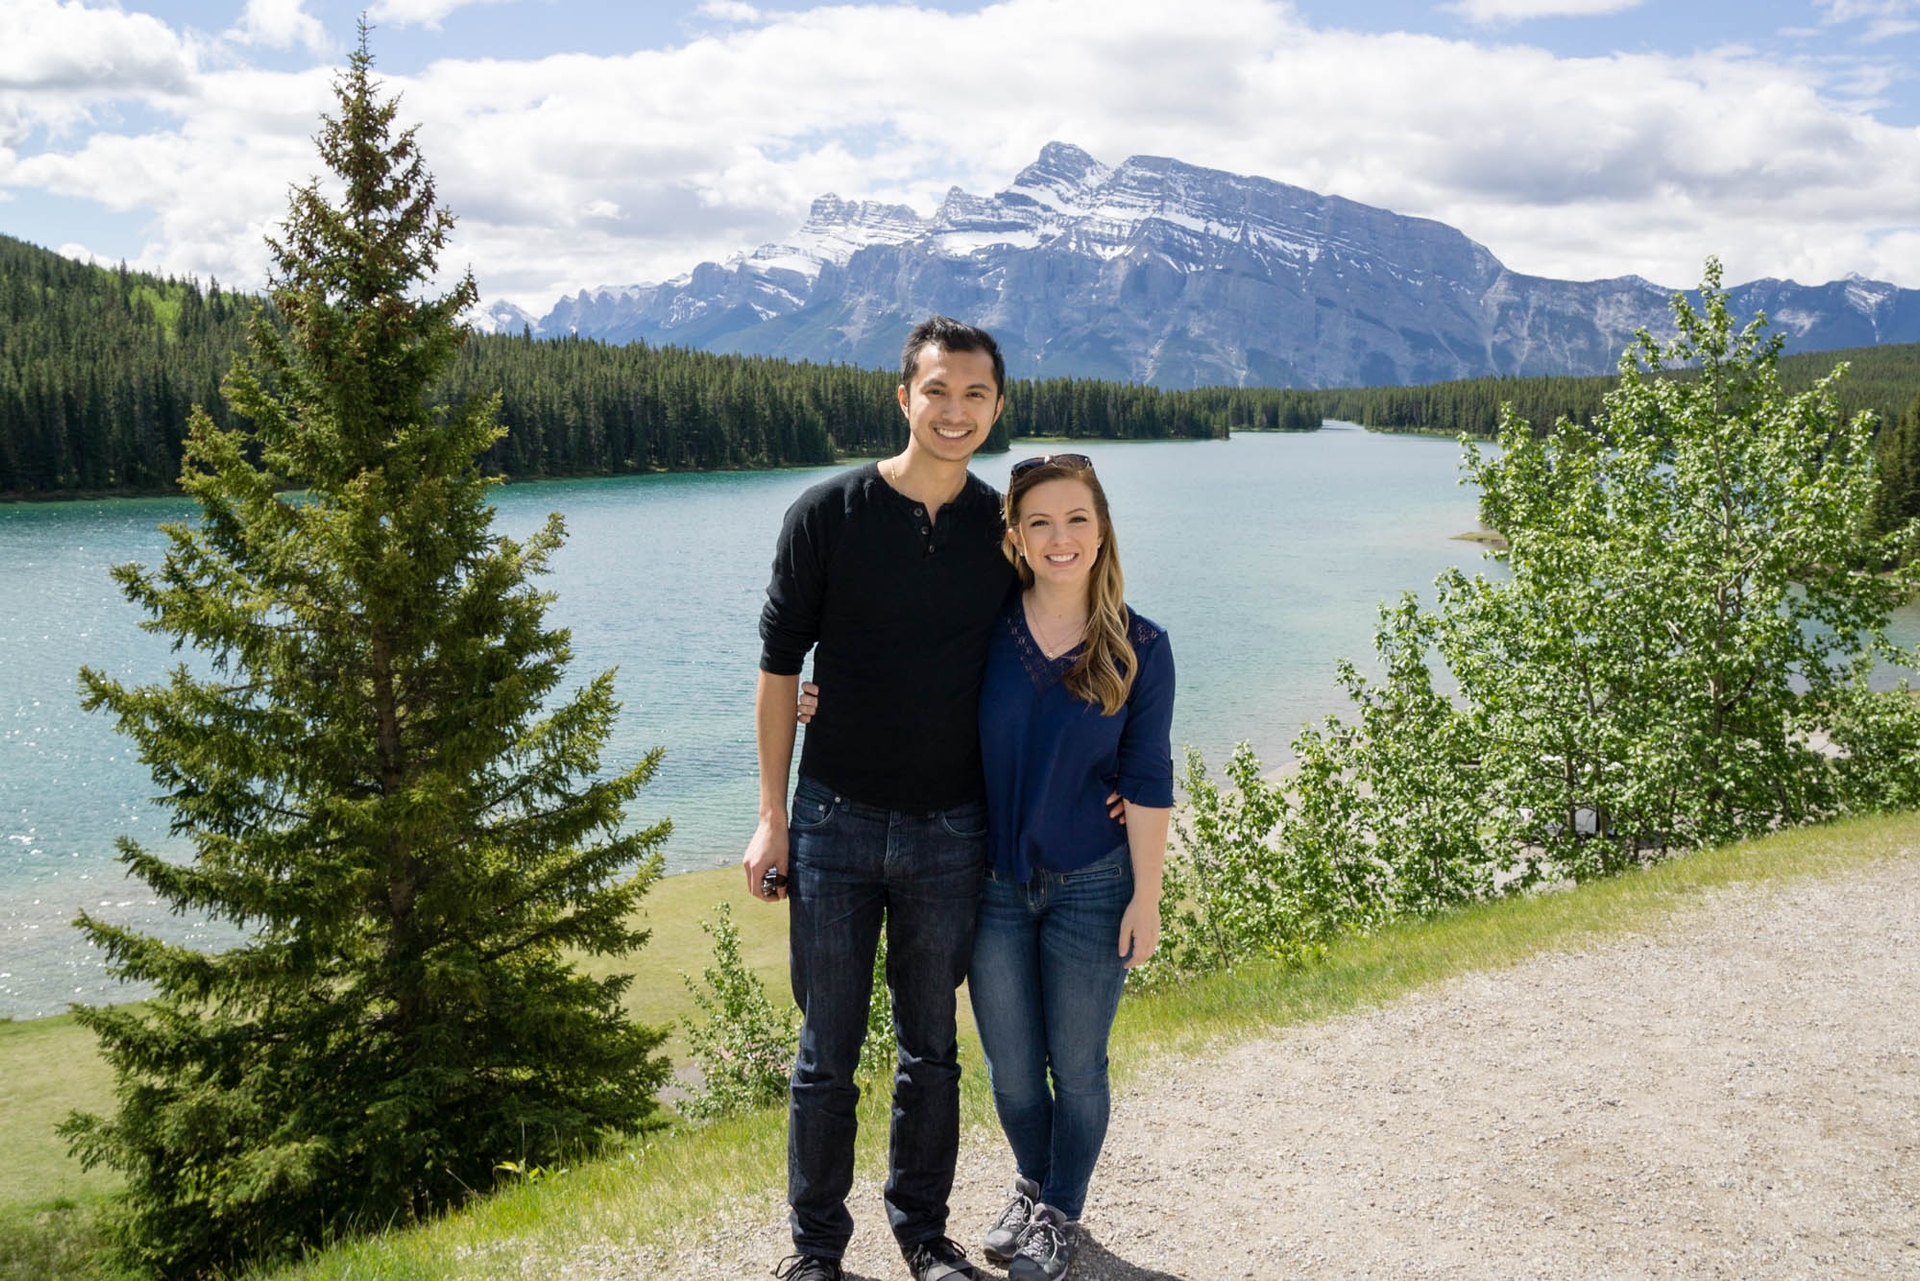 Jami and Frank in Banff, Alberta, Canada